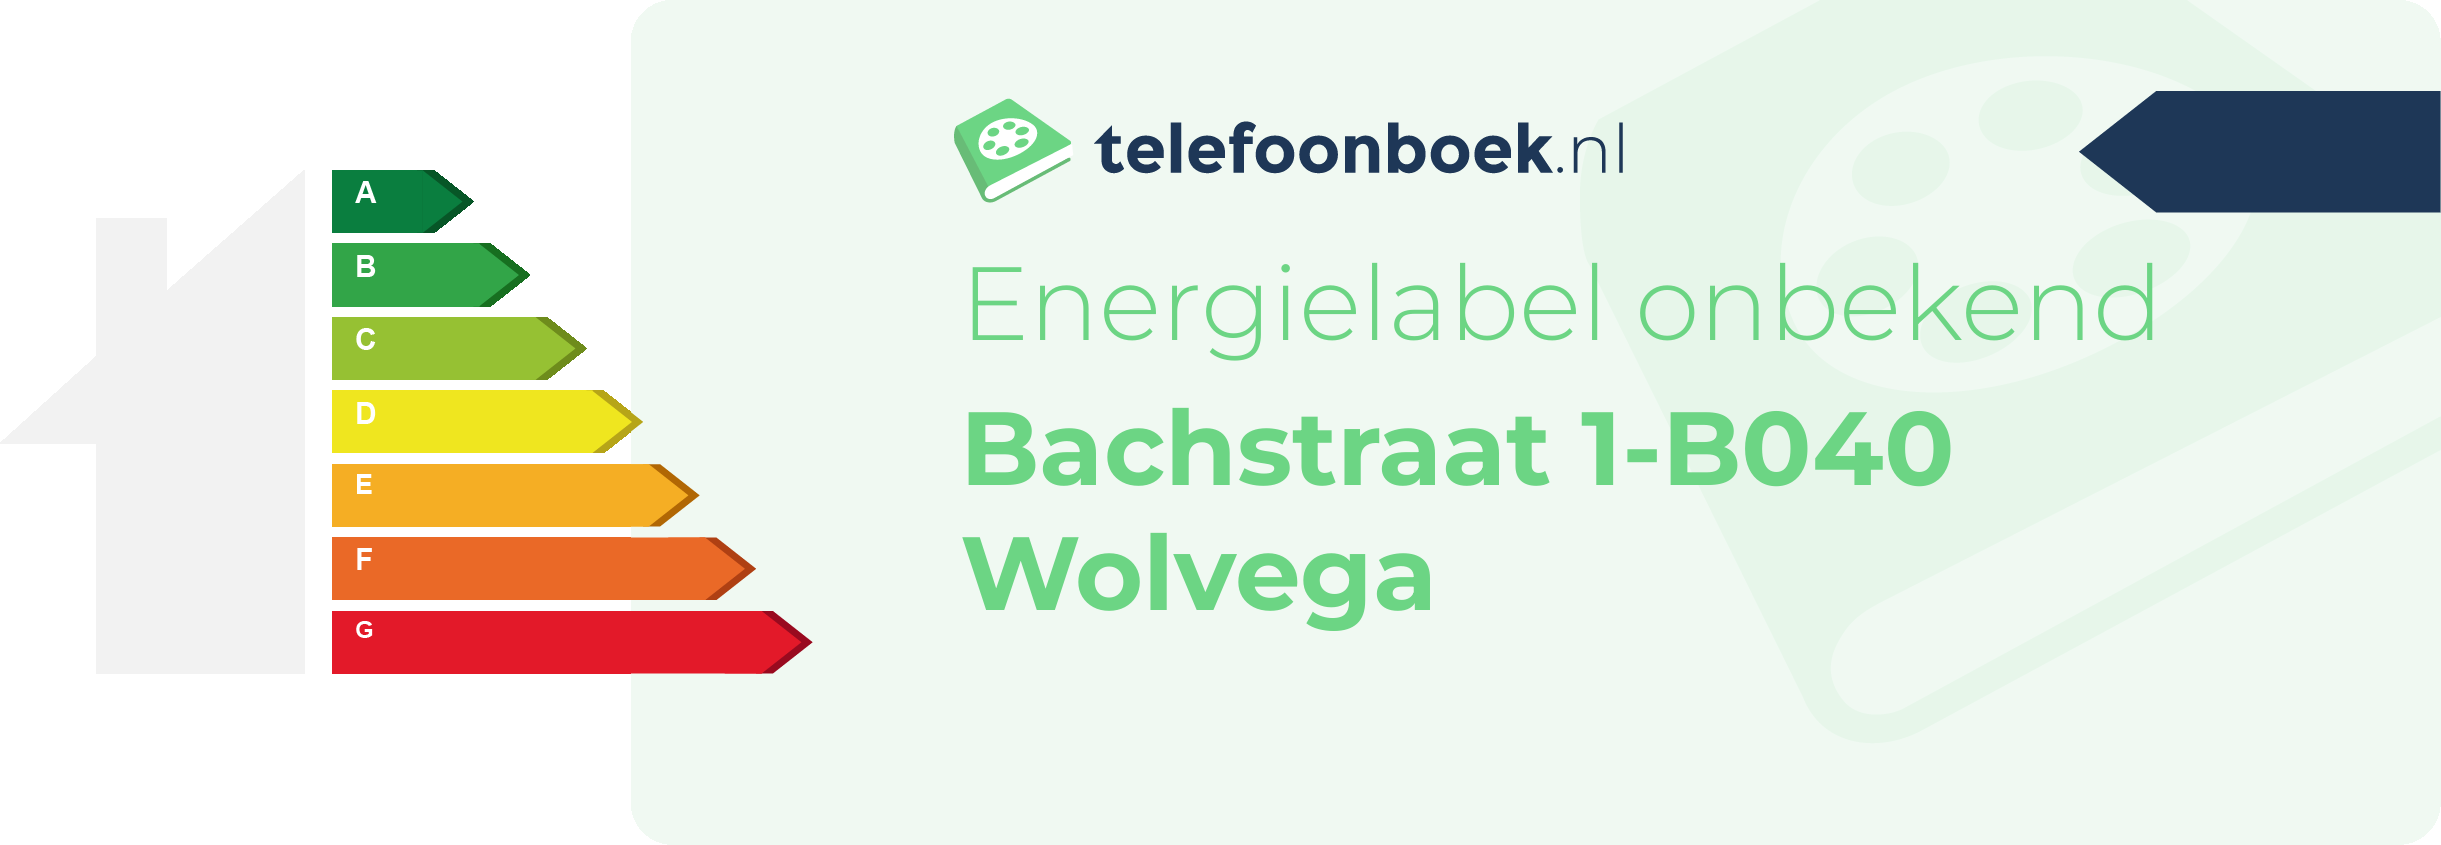 Energielabel Bachstraat 1-B040 Wolvega